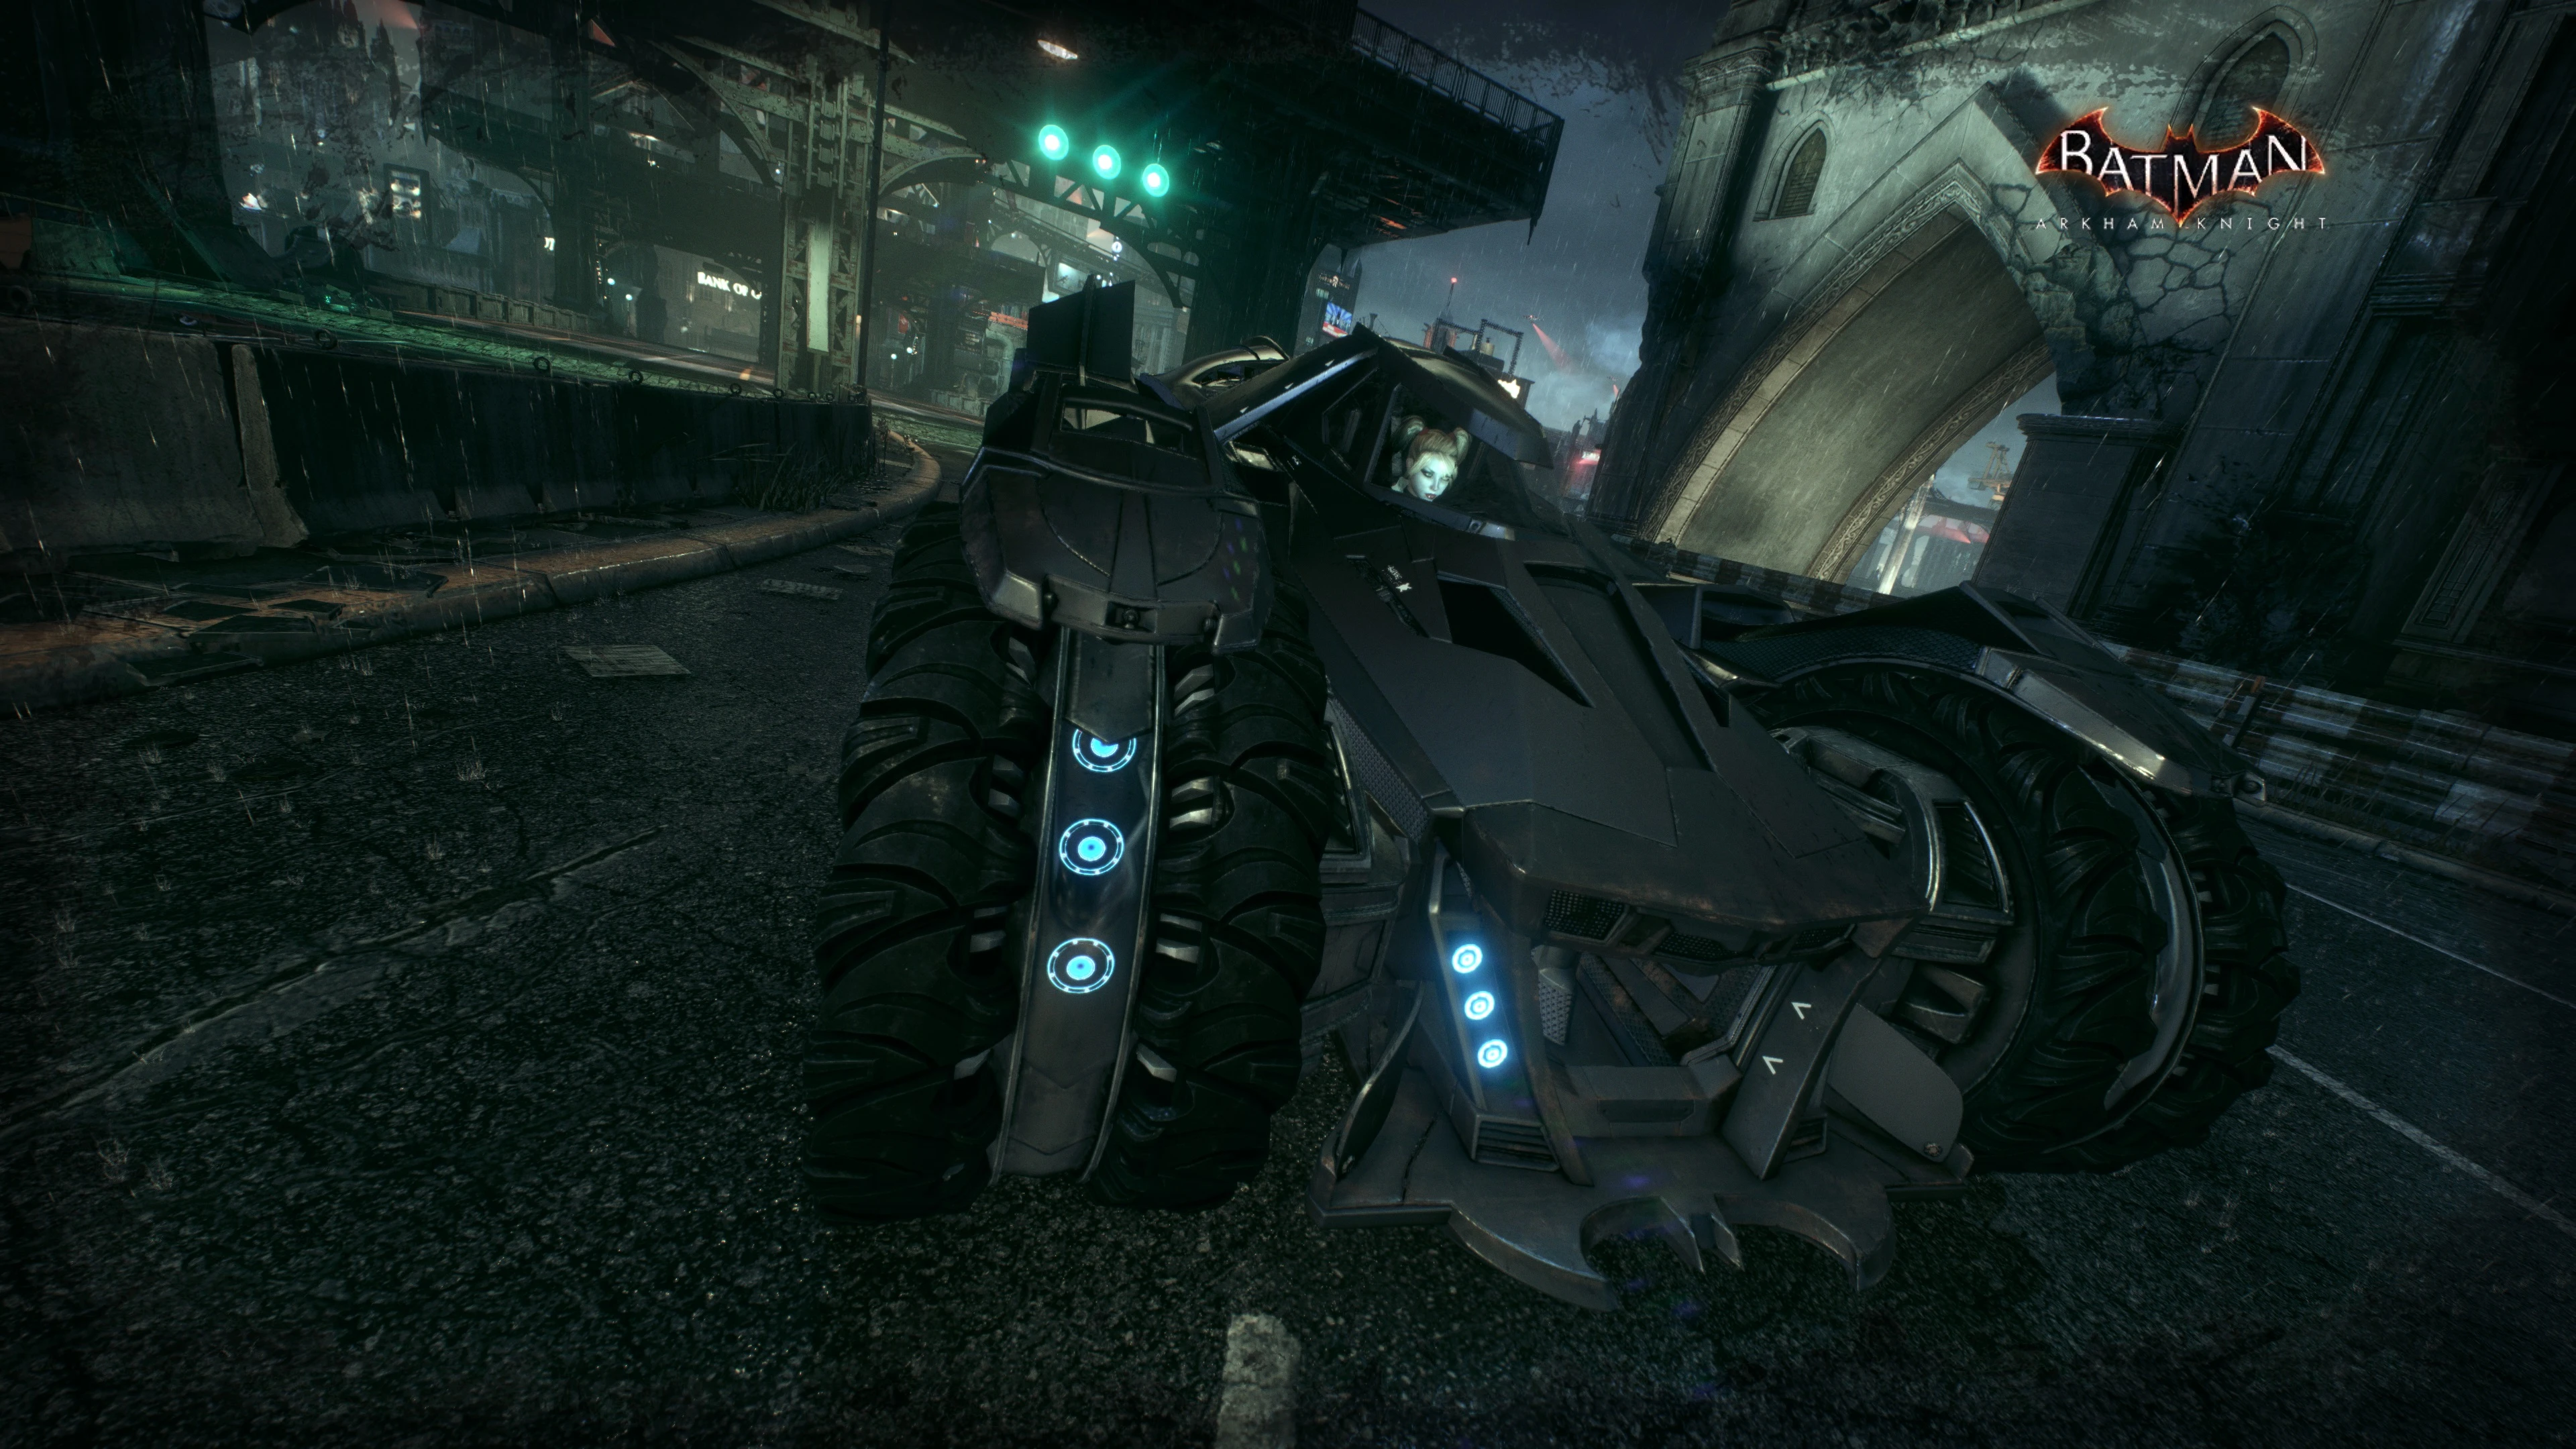 Nexus batman. Бэтмен рыцарь Аркхема Бэтмобиль. Бэтмобиль ГТА 5. Batman Arkham Knight GTX 660. БТР из Аркхем кнайт.